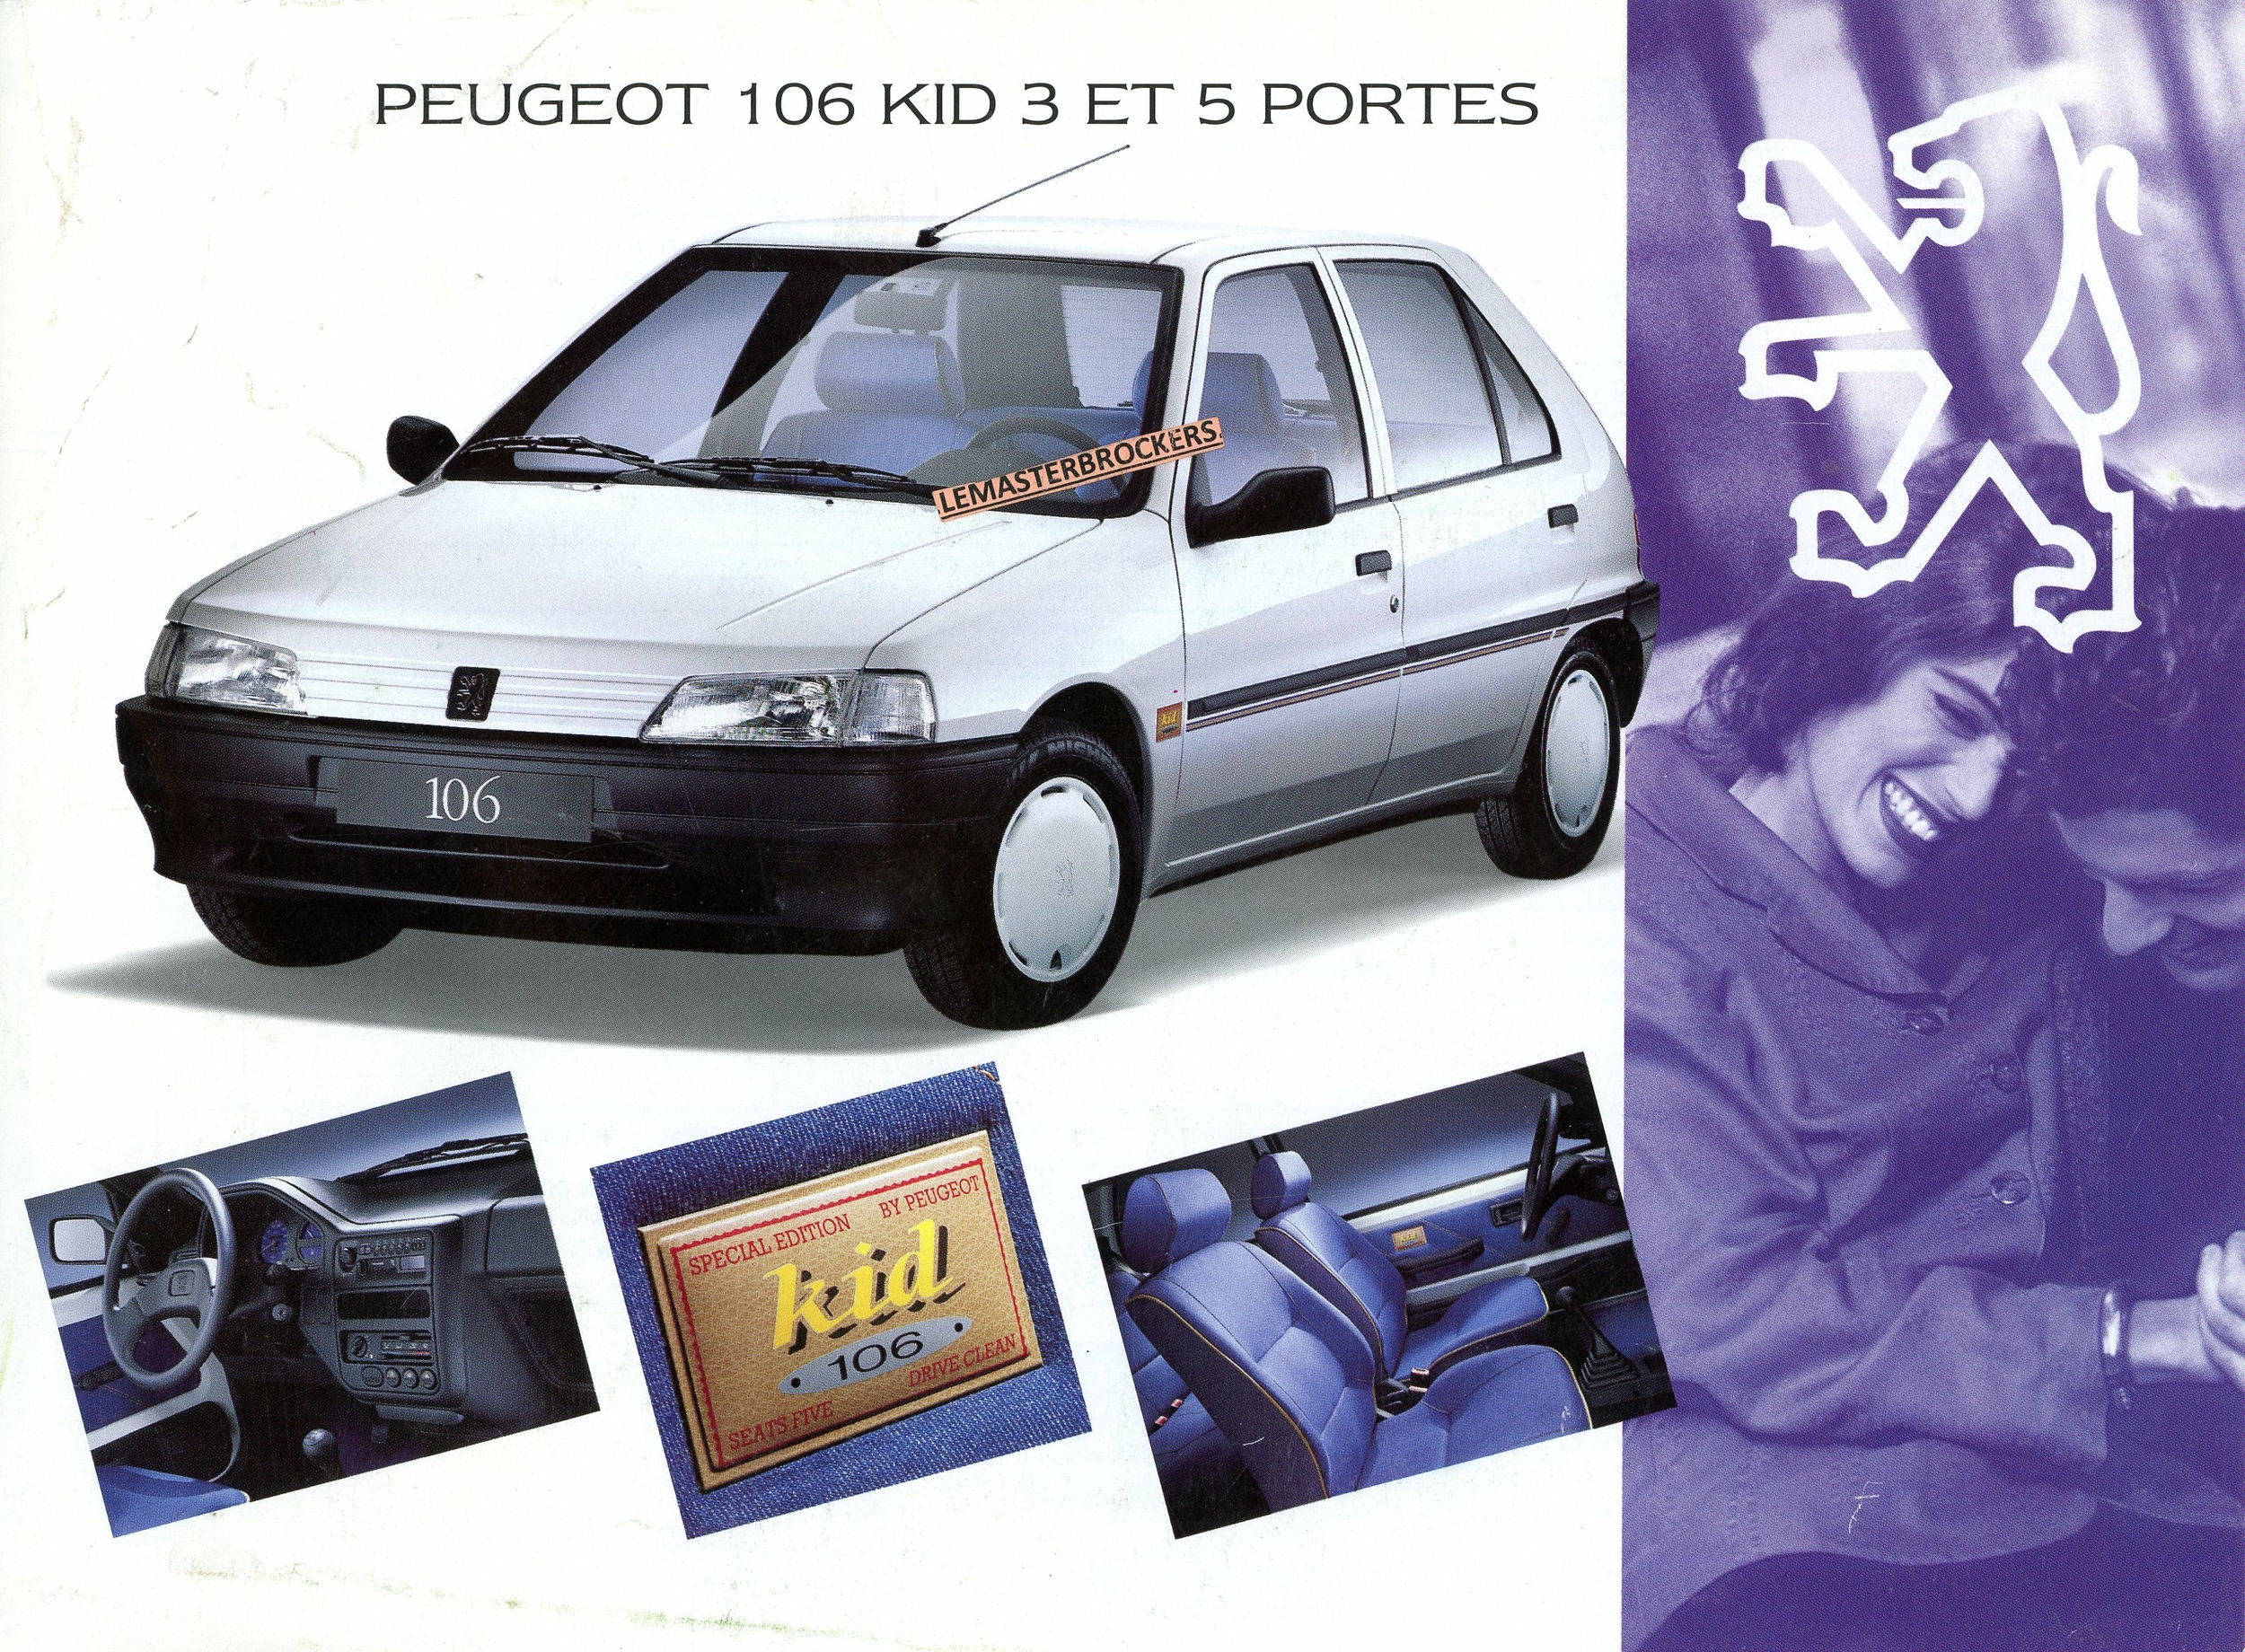 BROCHURE-PEUGEOT-106-KID-LEMASTERBROCKERS-1993-FICHE-PEUGEOT